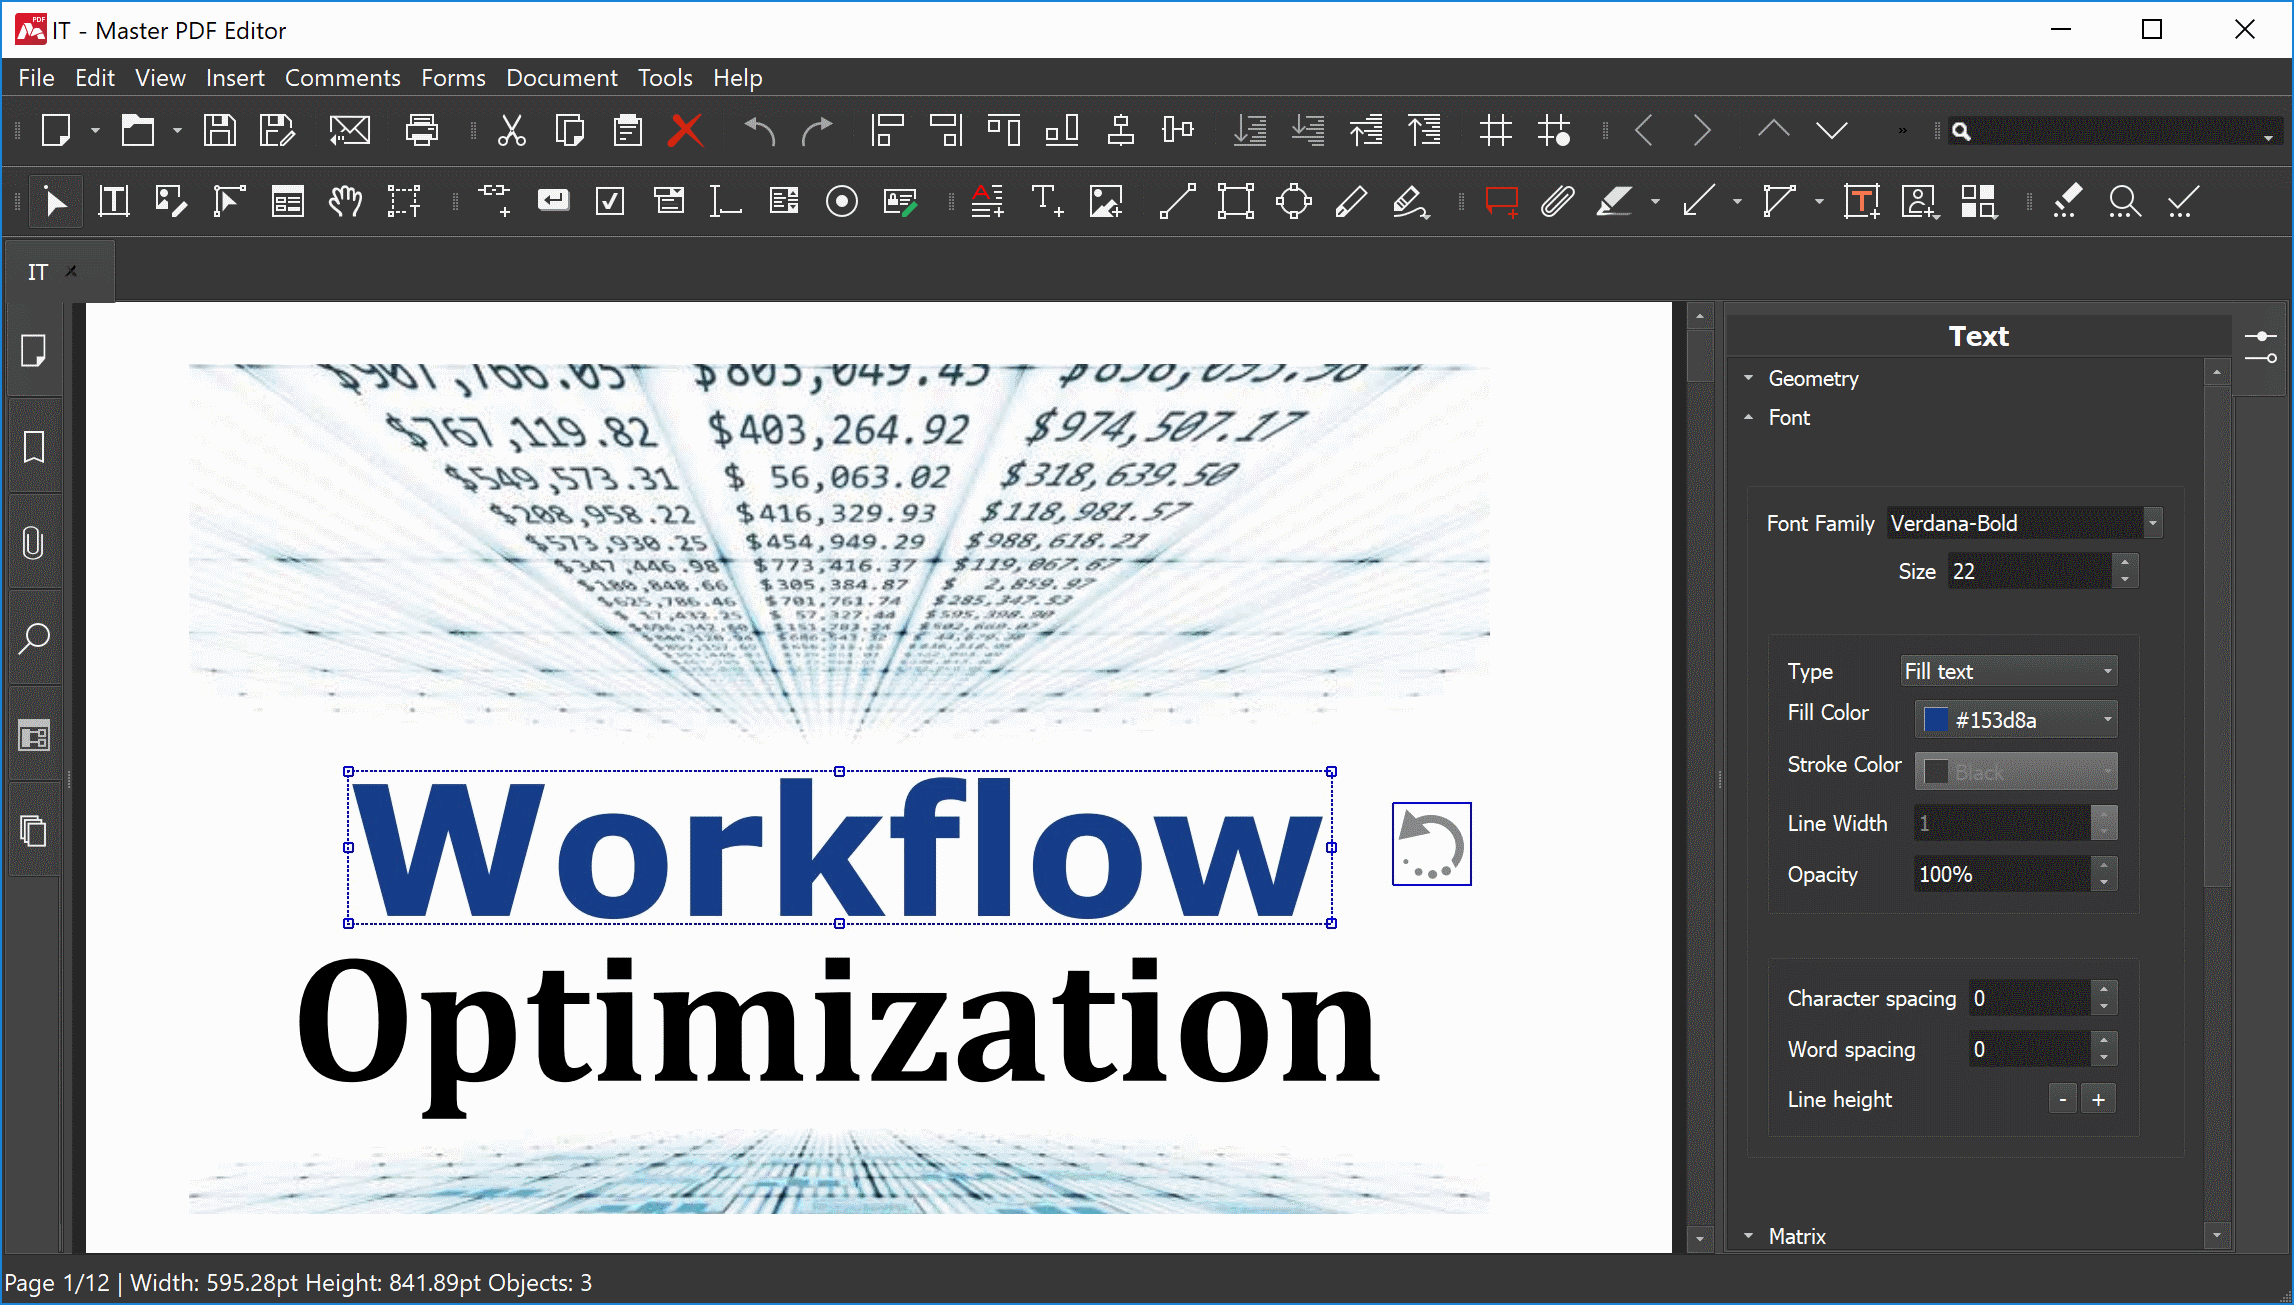 free software to edit pdf files download